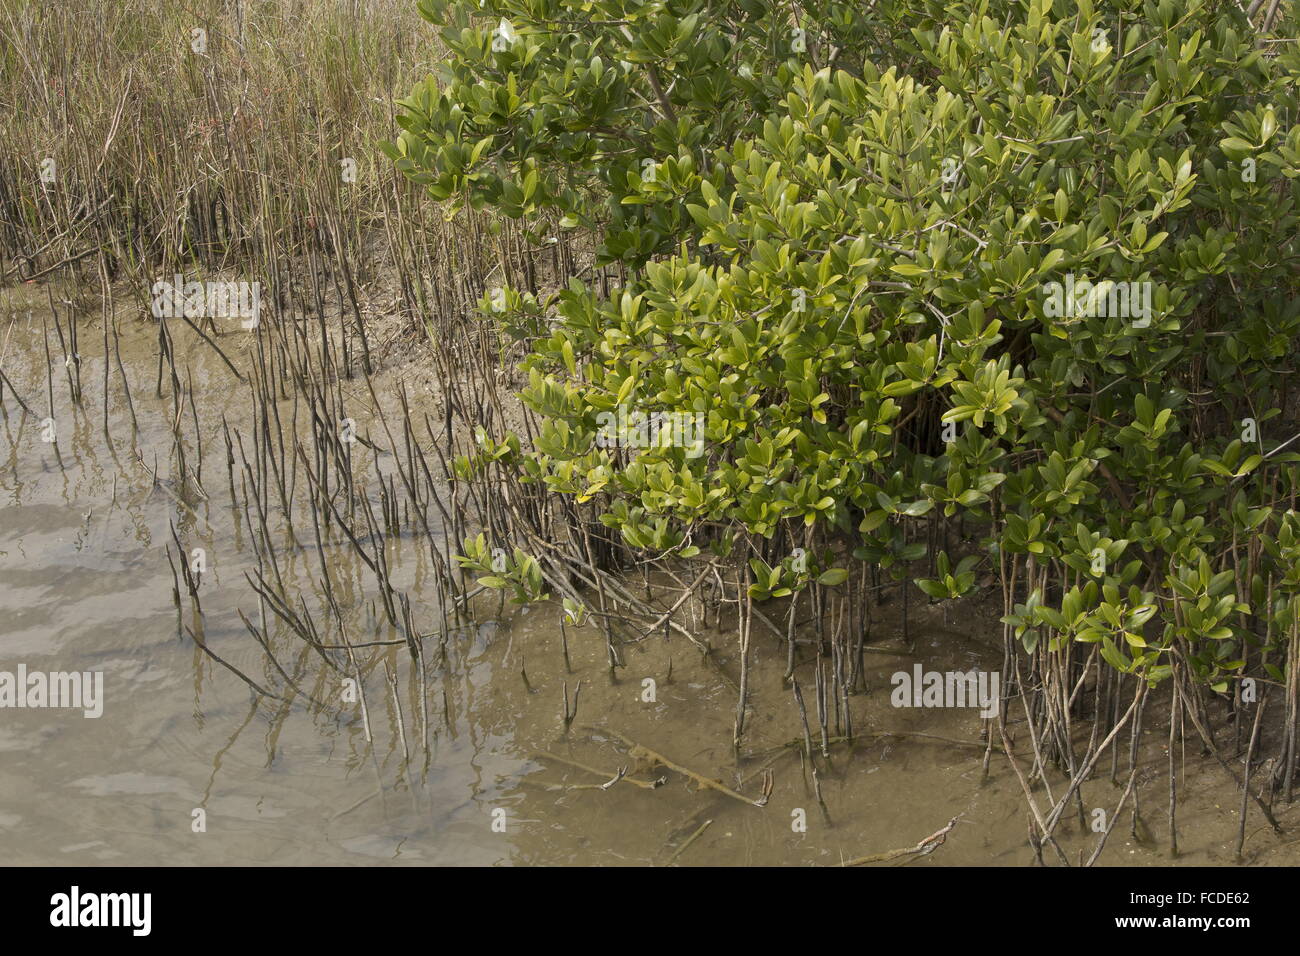 Black mangrove, Avicennia germinans on saltmarsh edge with pneumatophores (aerating roots), Texas. Stock Photo